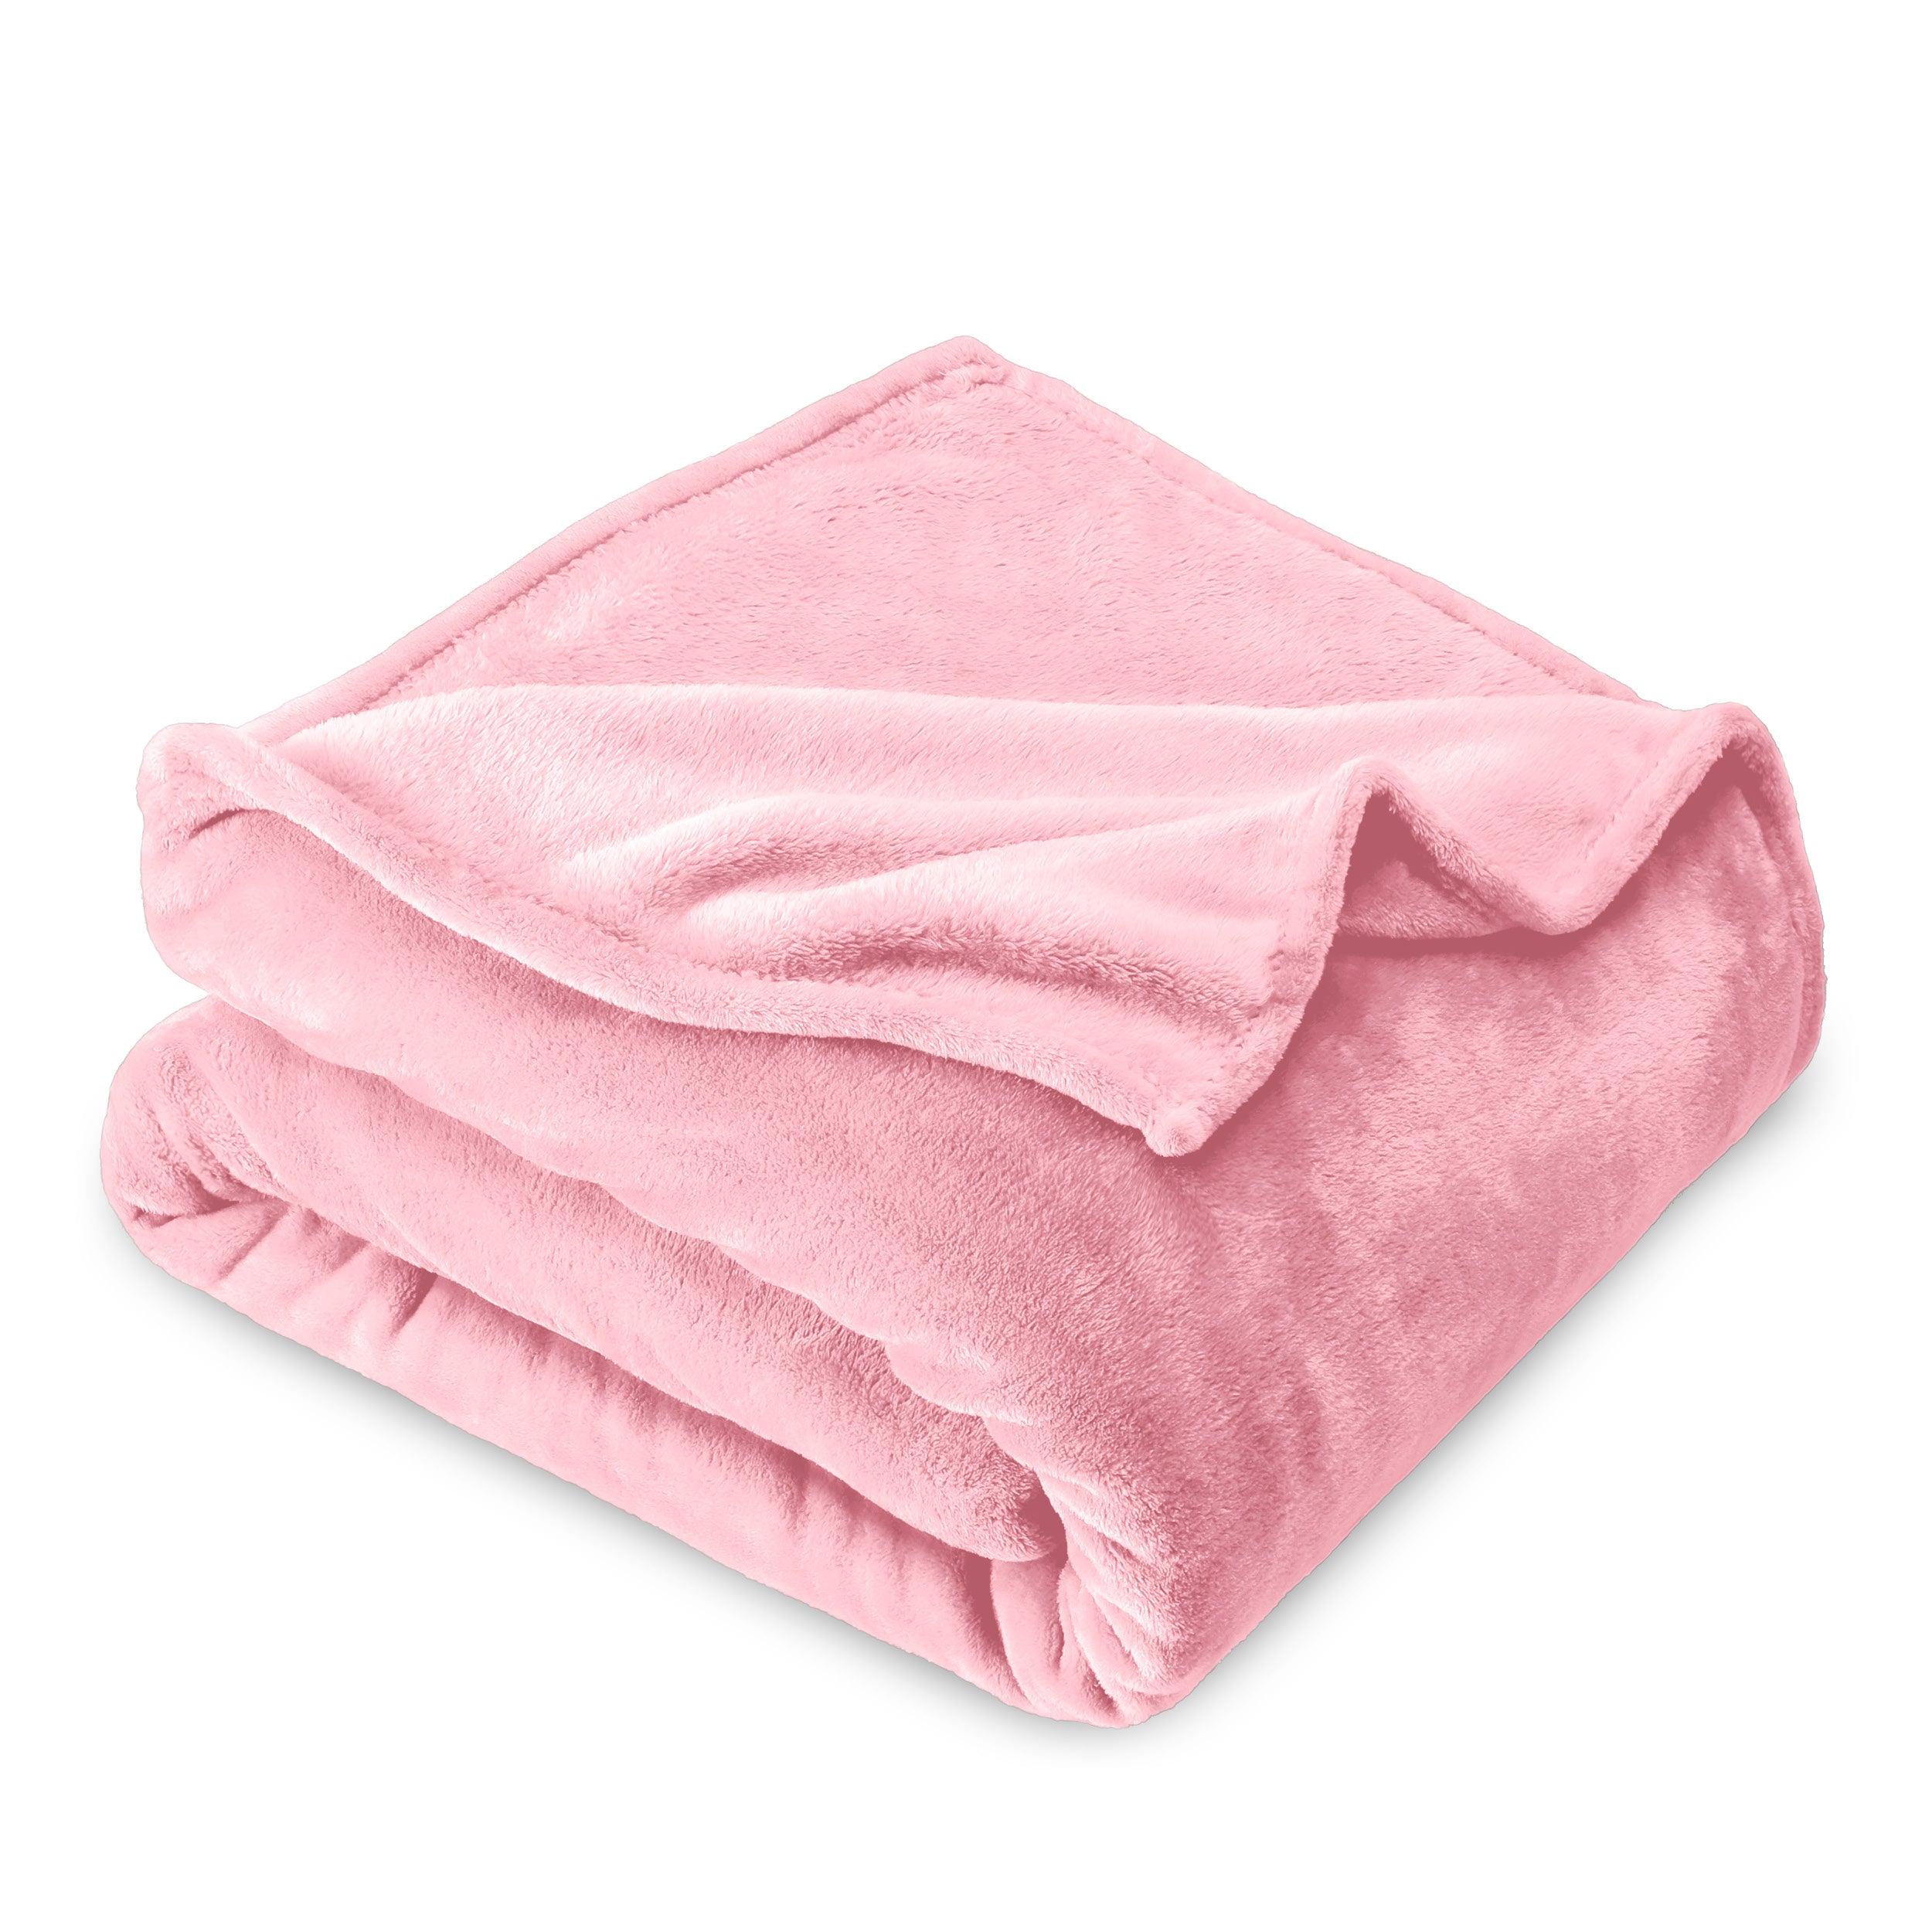 Microplush blanket folded neatly